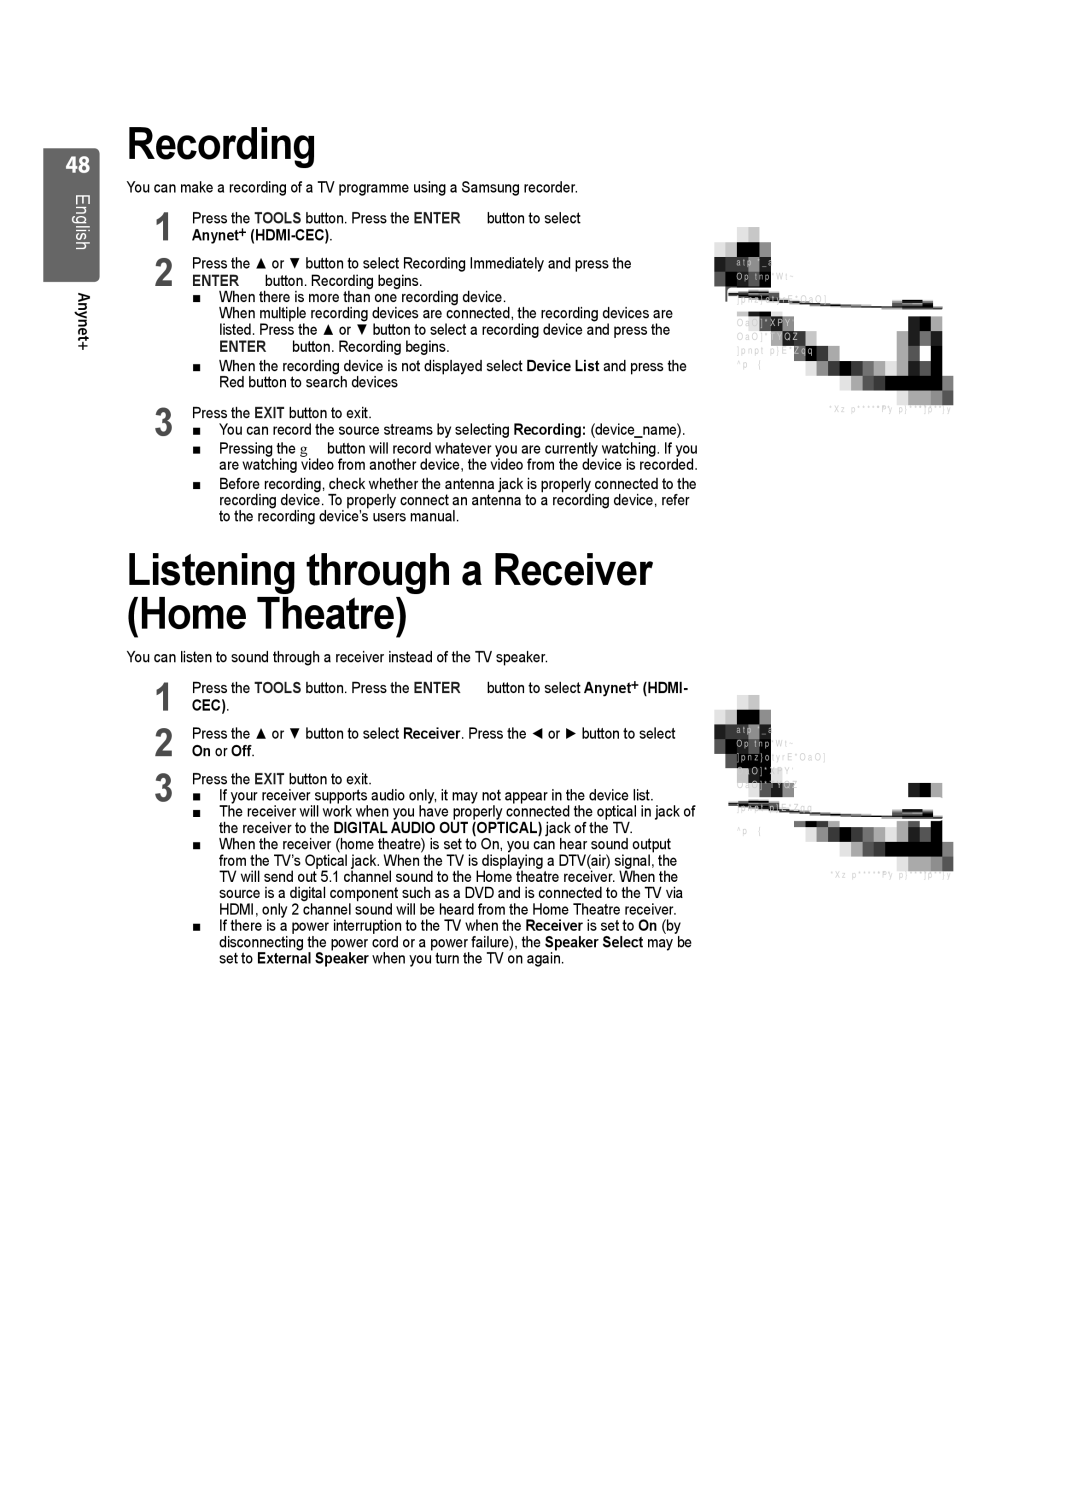 Samsung UE37B6000VWXXC, UE37B6000VWXXH manual Recording, Listening through a Receiver Home Theatre, On or Off 